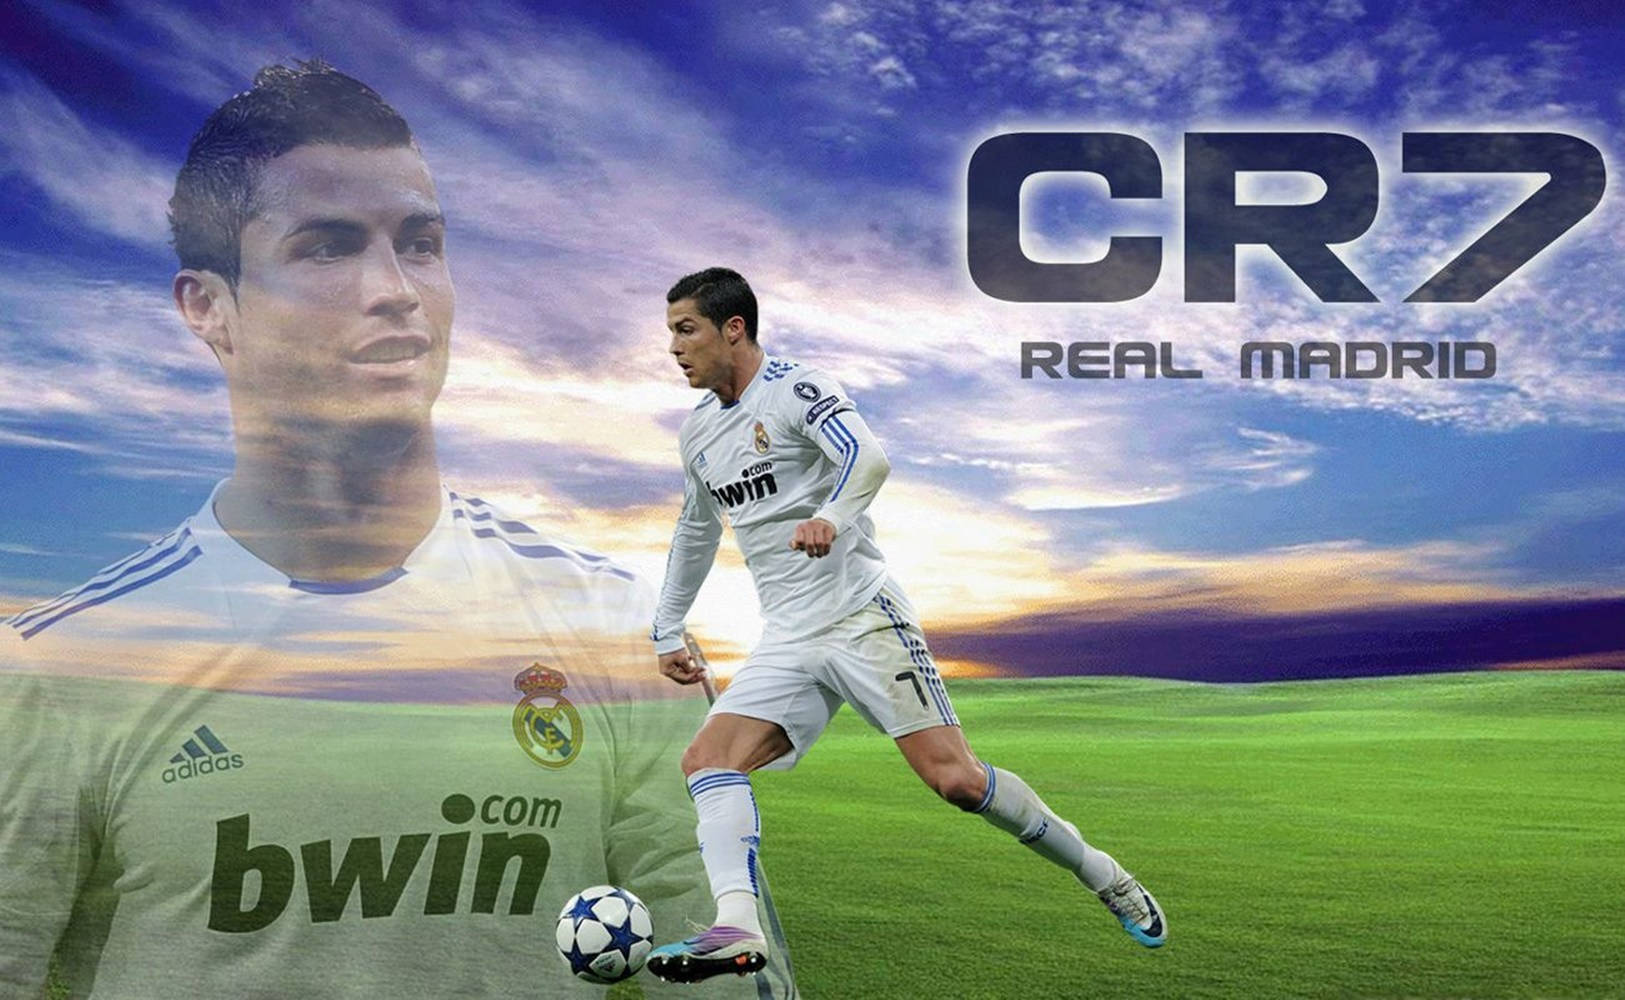 Cristiano Ronaldo Cool Real Madrid Football Field Wallpaper